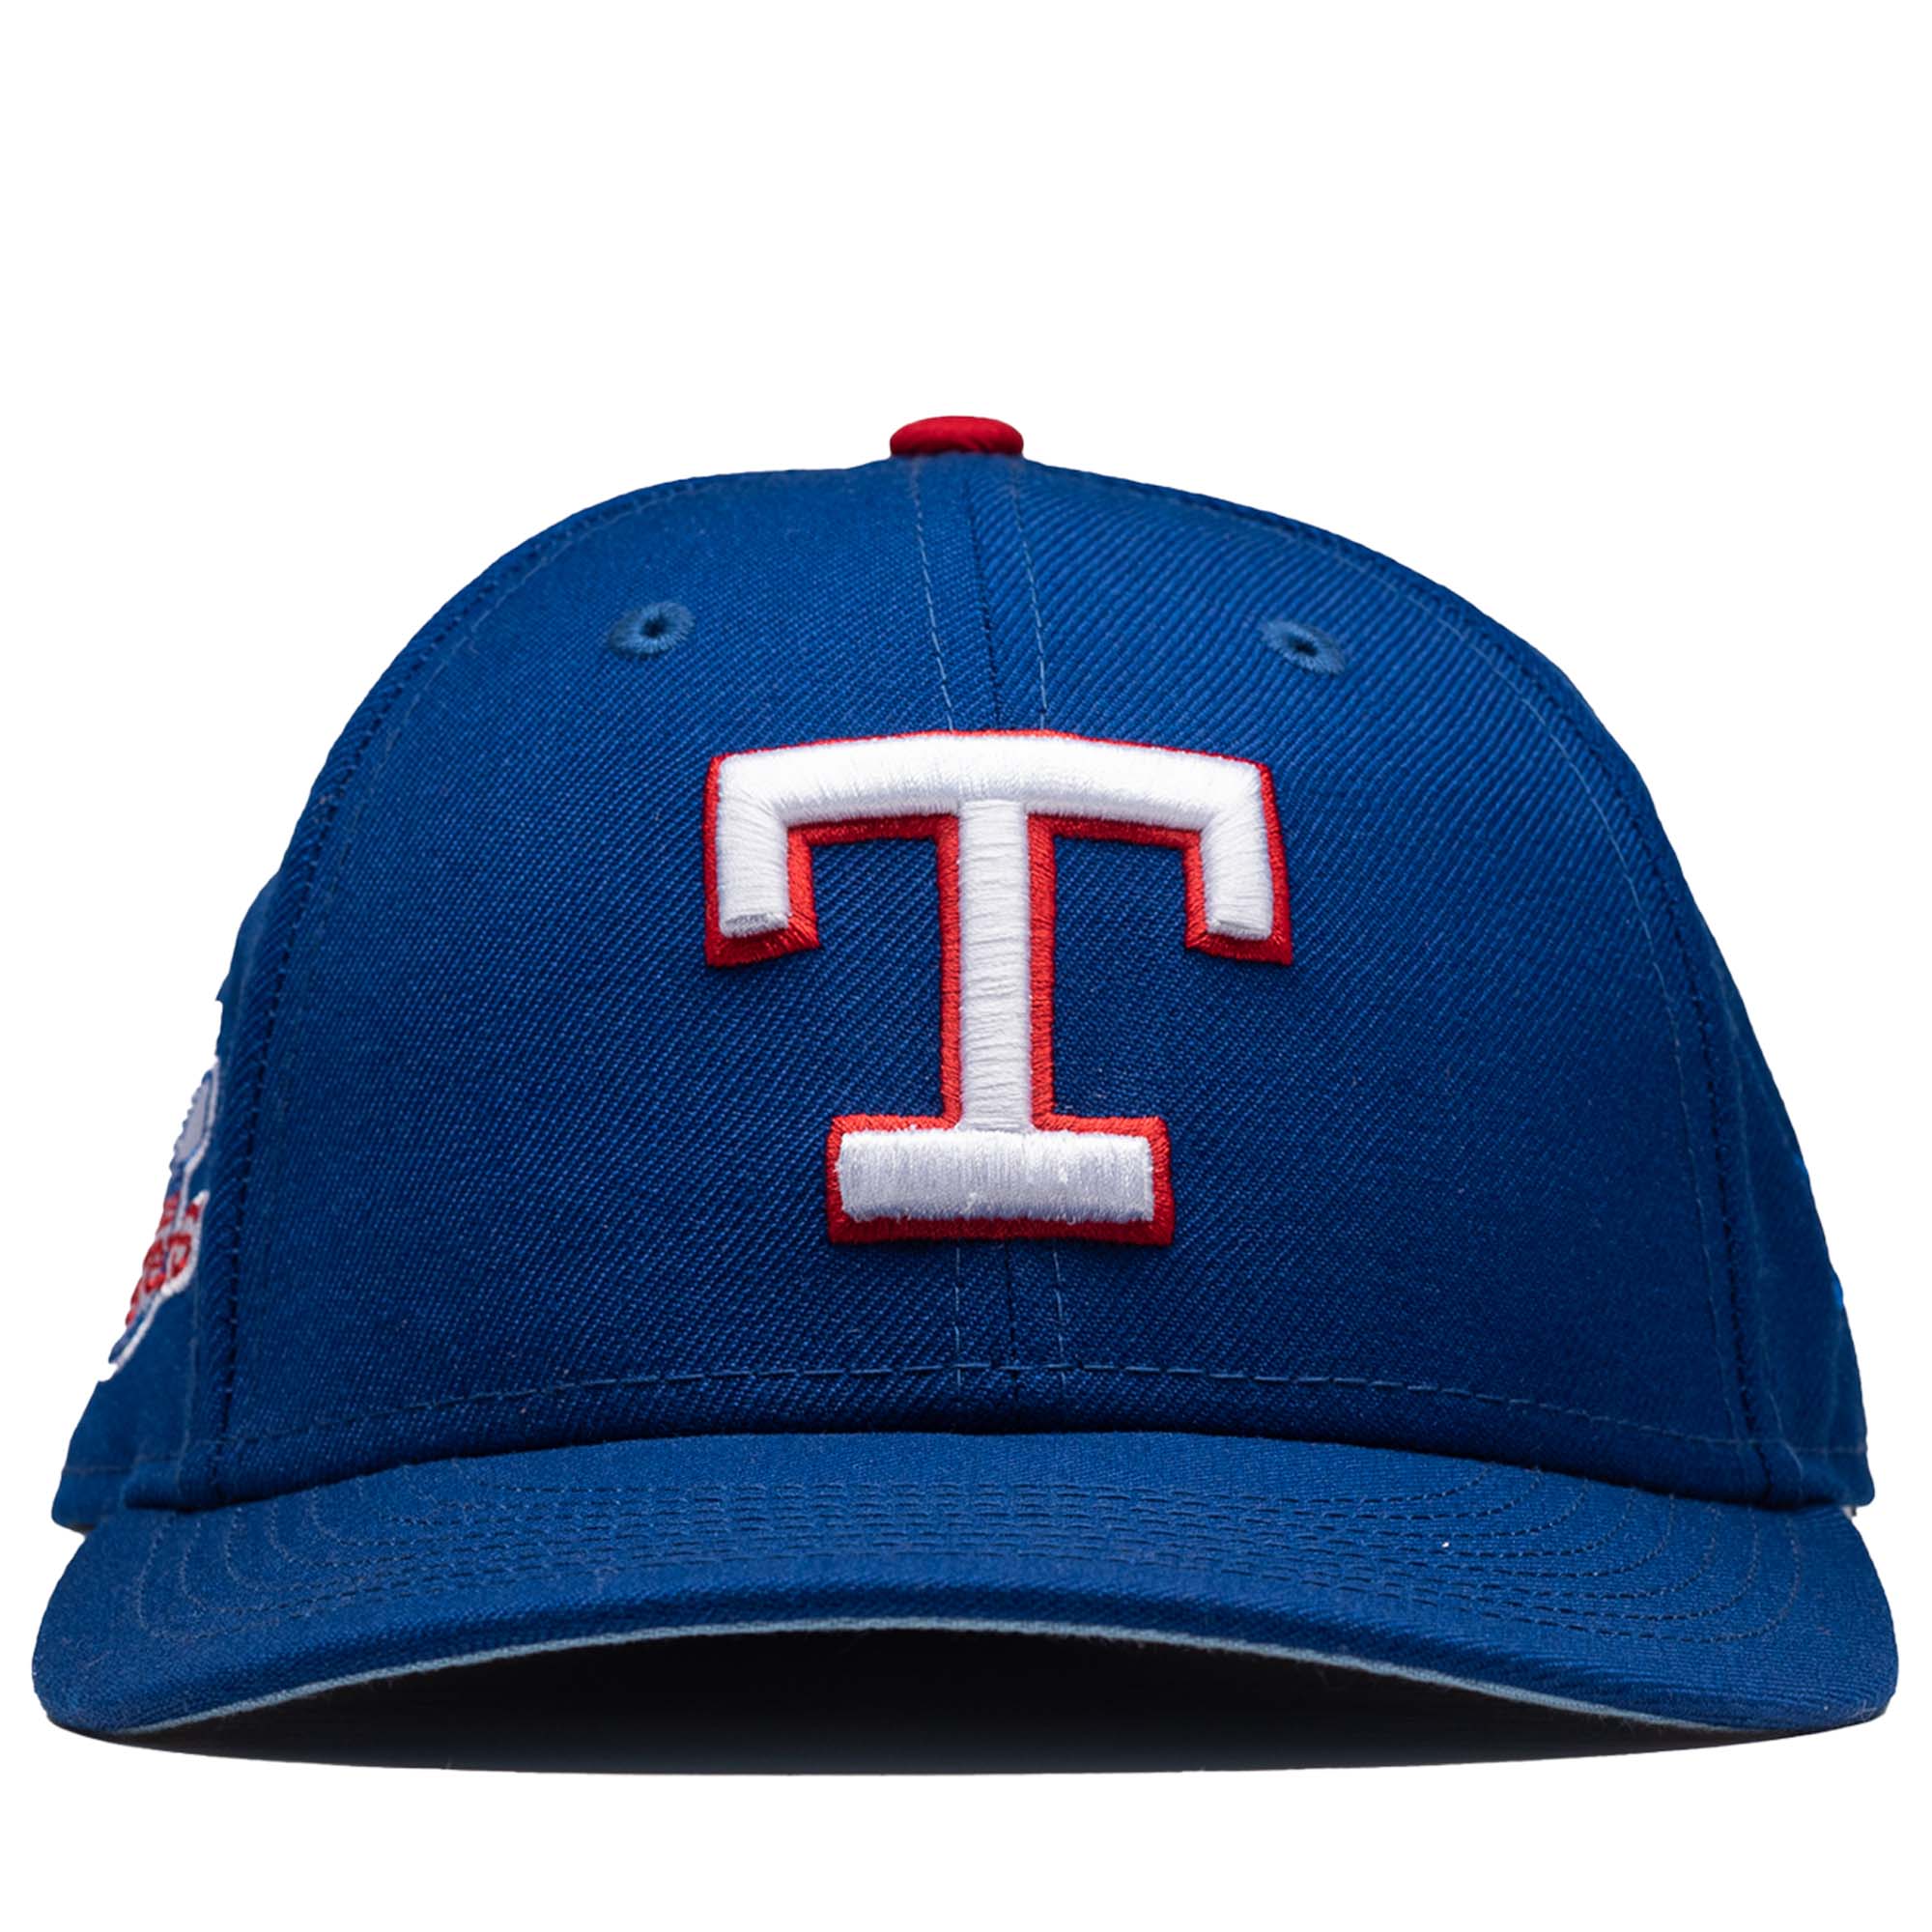 New Era, Accessories, Texas Rangers Hat